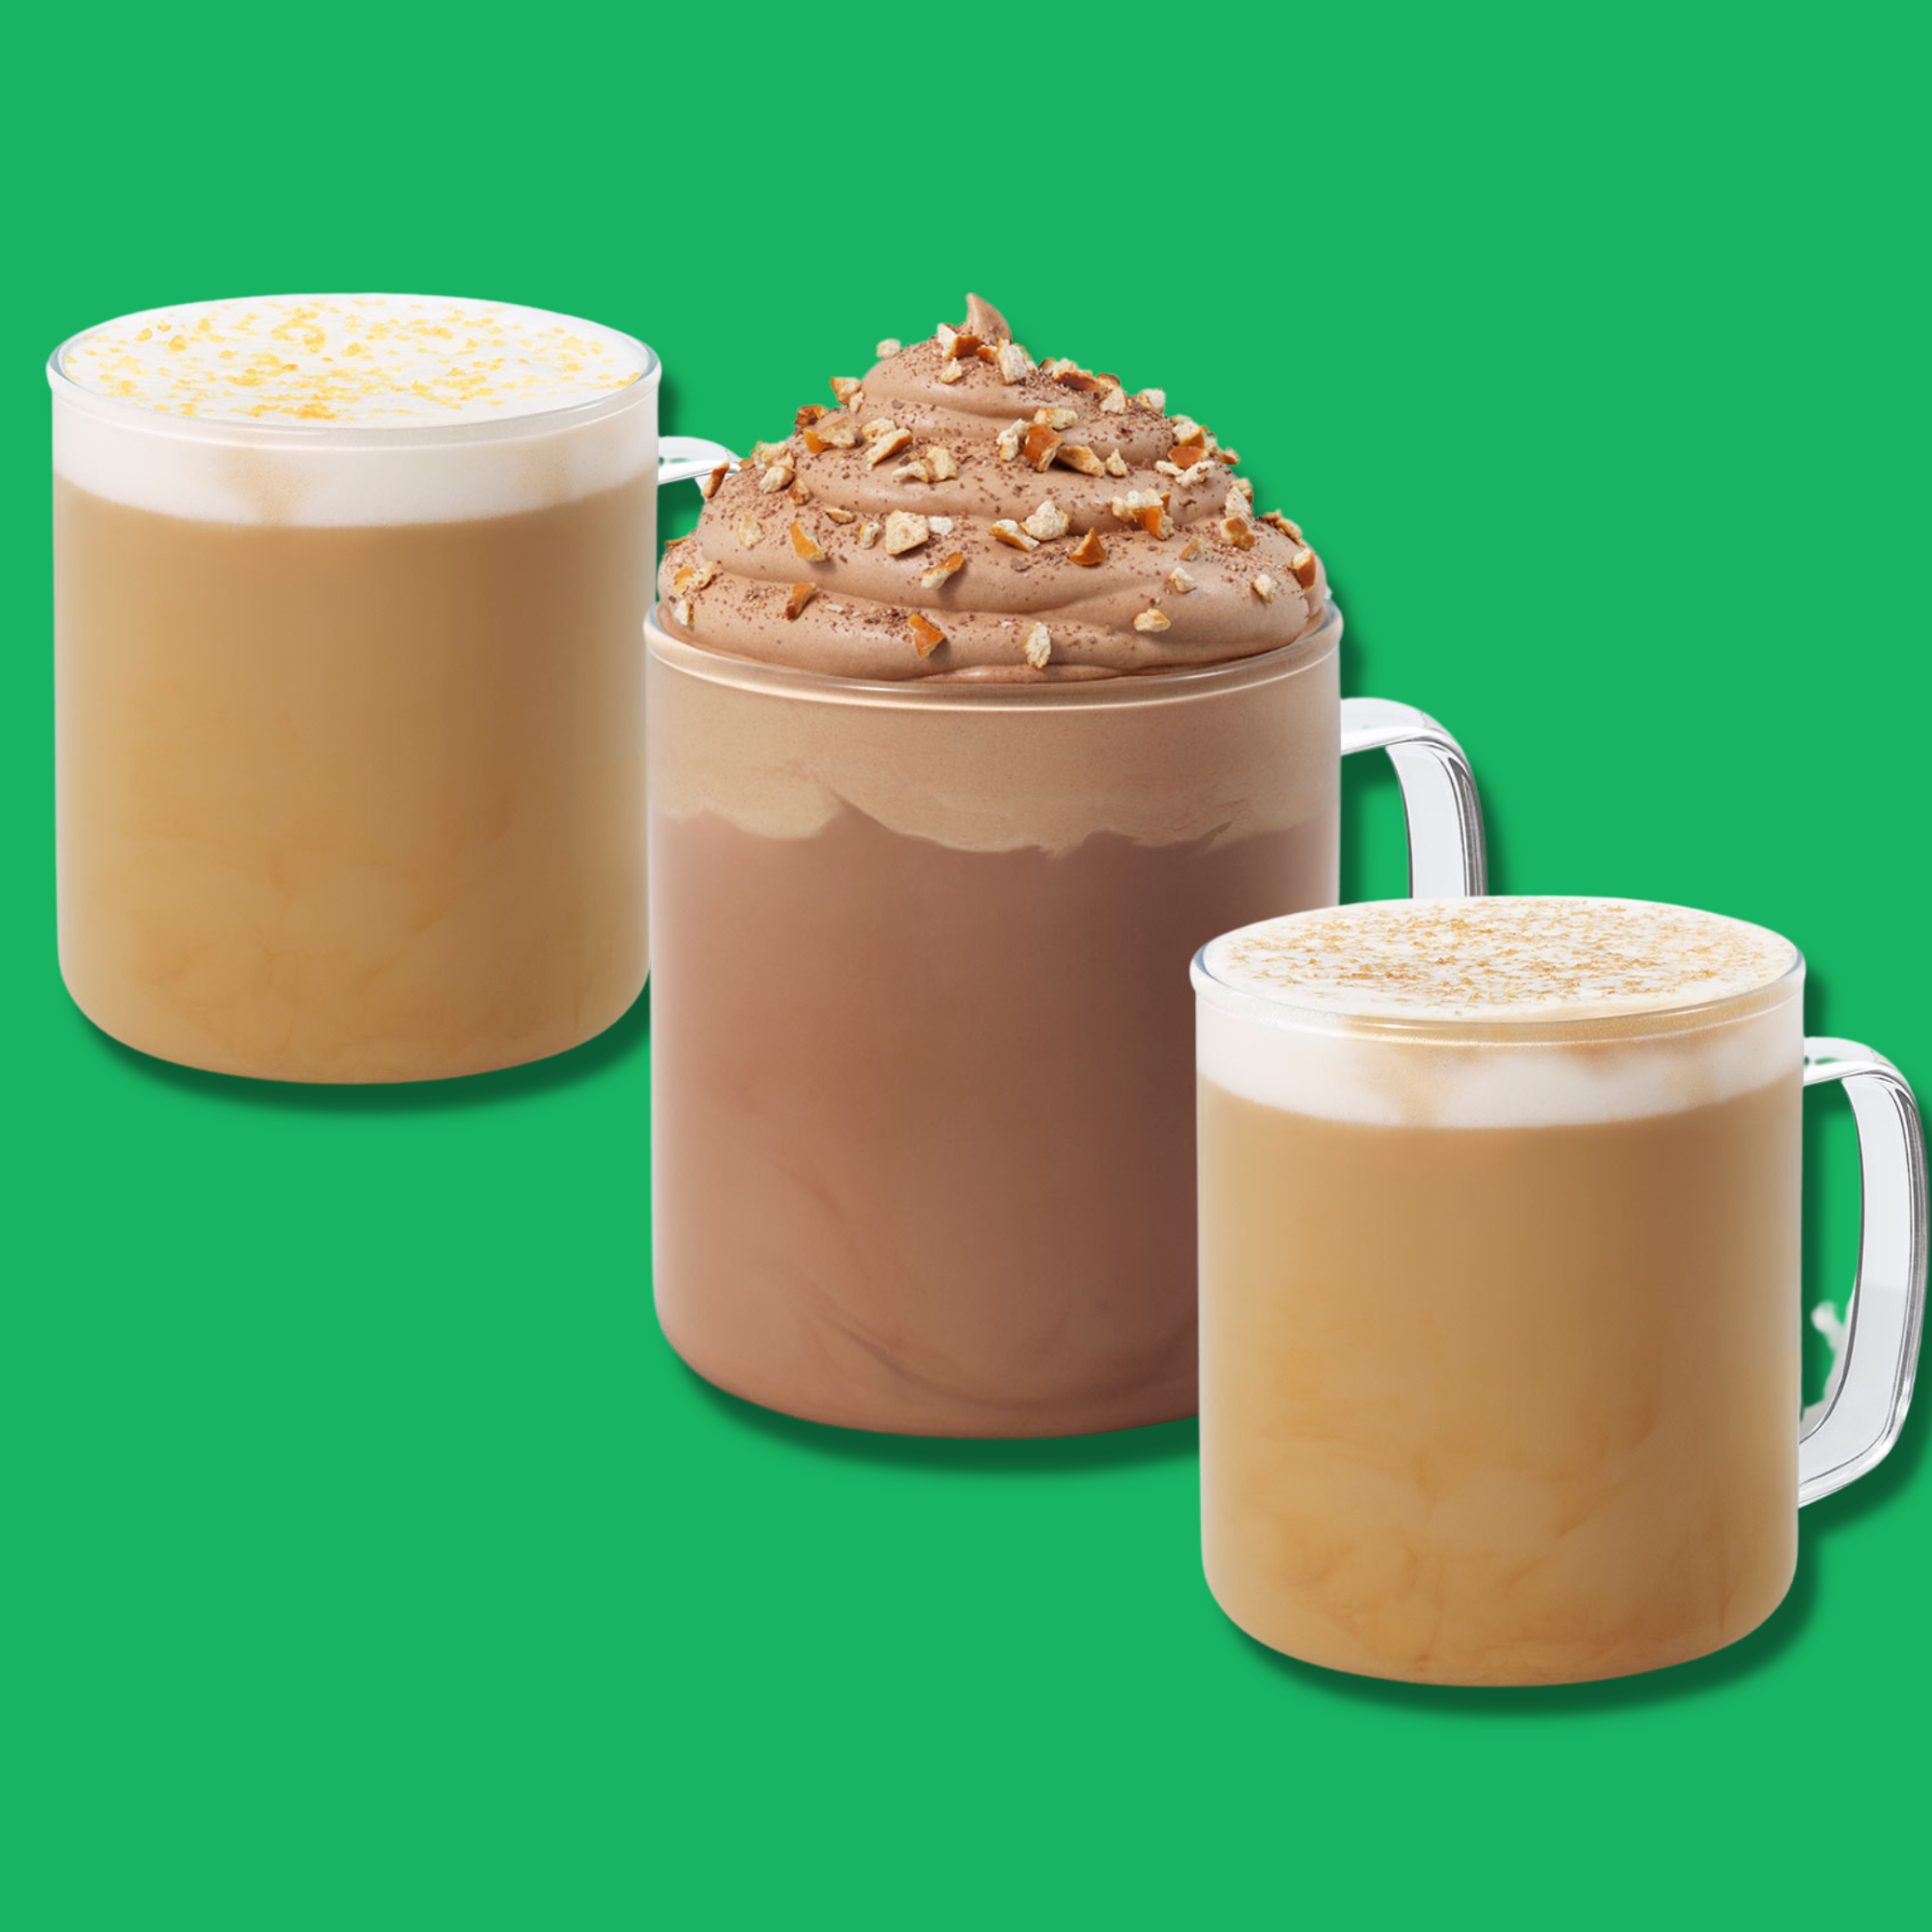 Starbucks' Winter Menu Features Three New Drinks